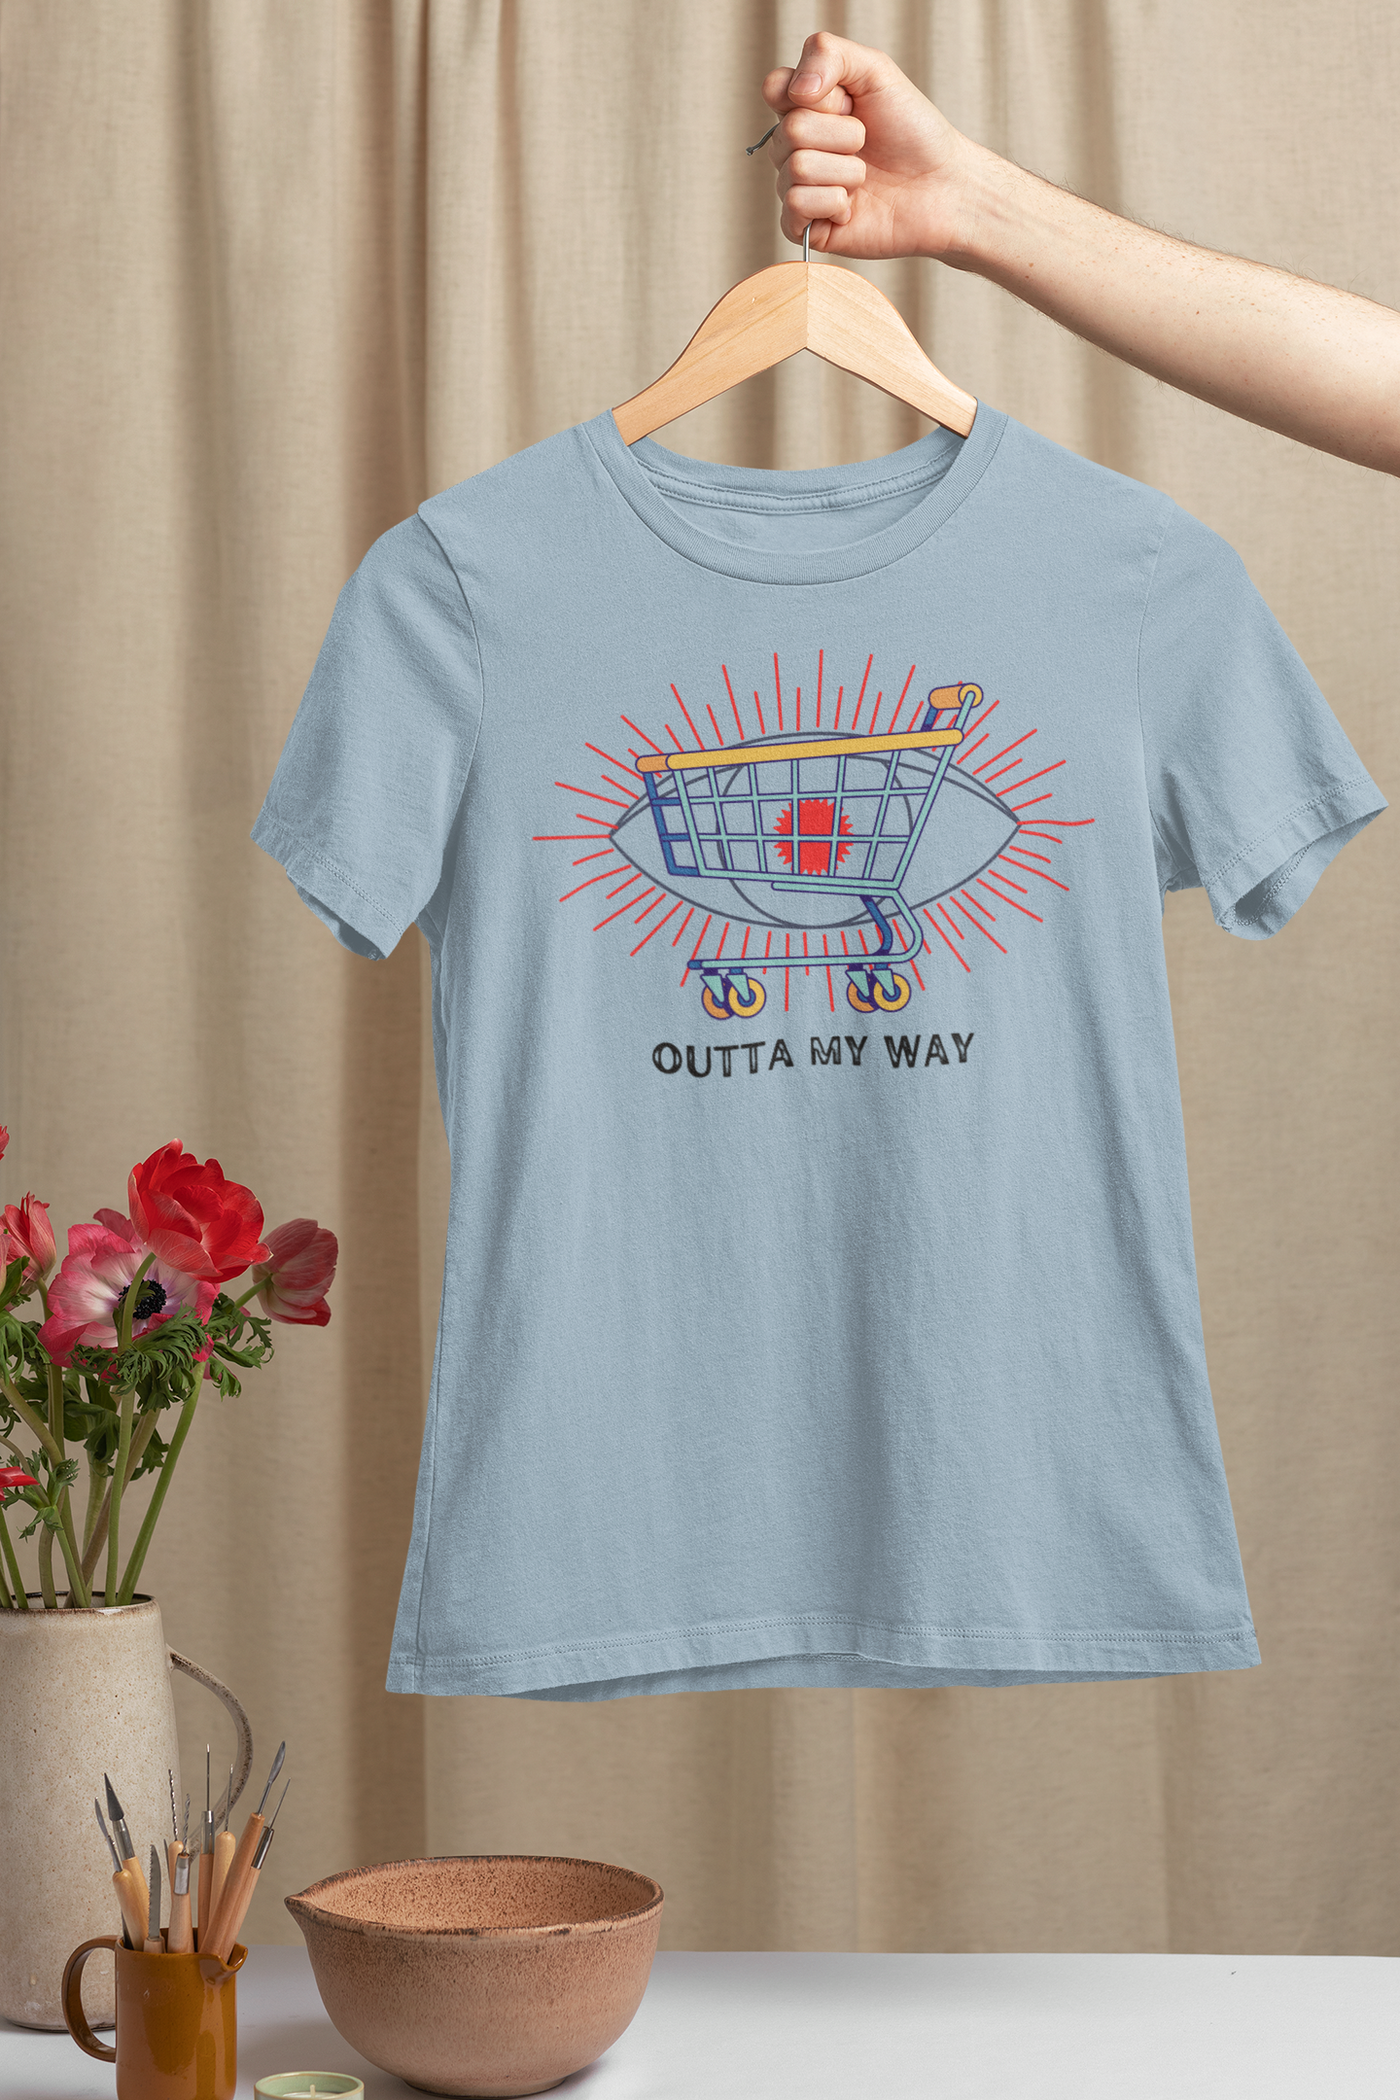 Outta My Way - Shopping Cart Graphic t-shirt